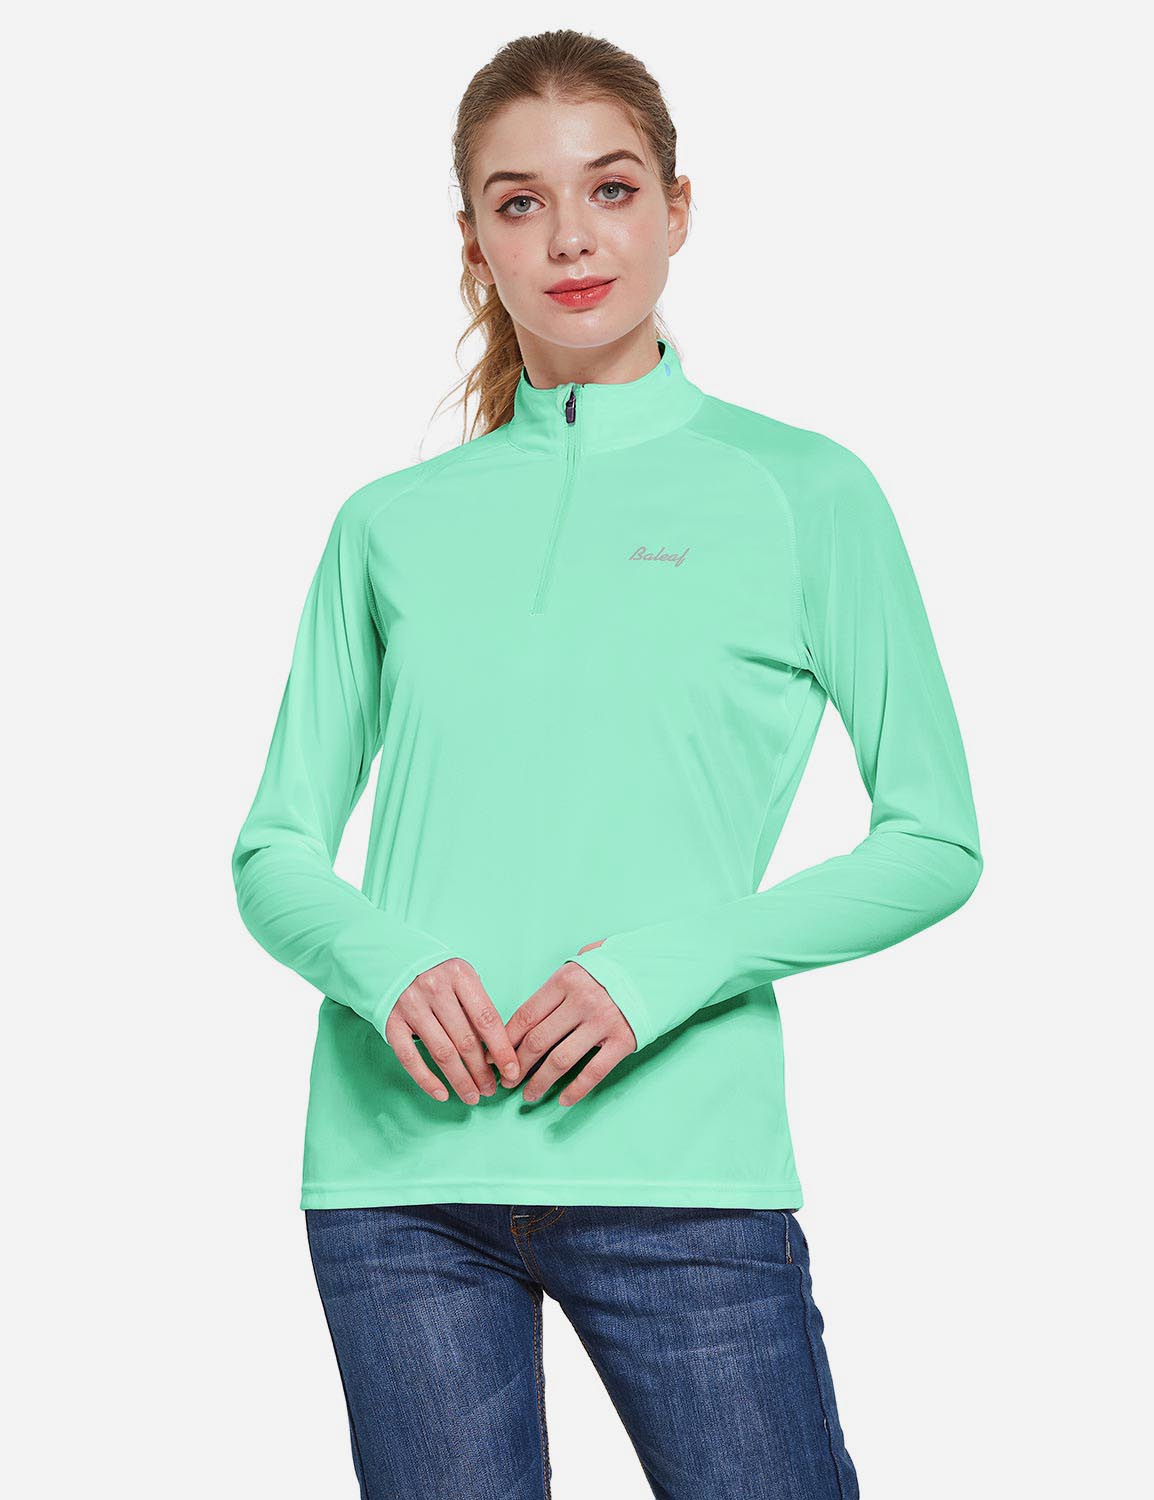 Baleaf Women's UP50+ Collared Long Sleeved Tshirt w Thumbholes aga065 Light Green Front